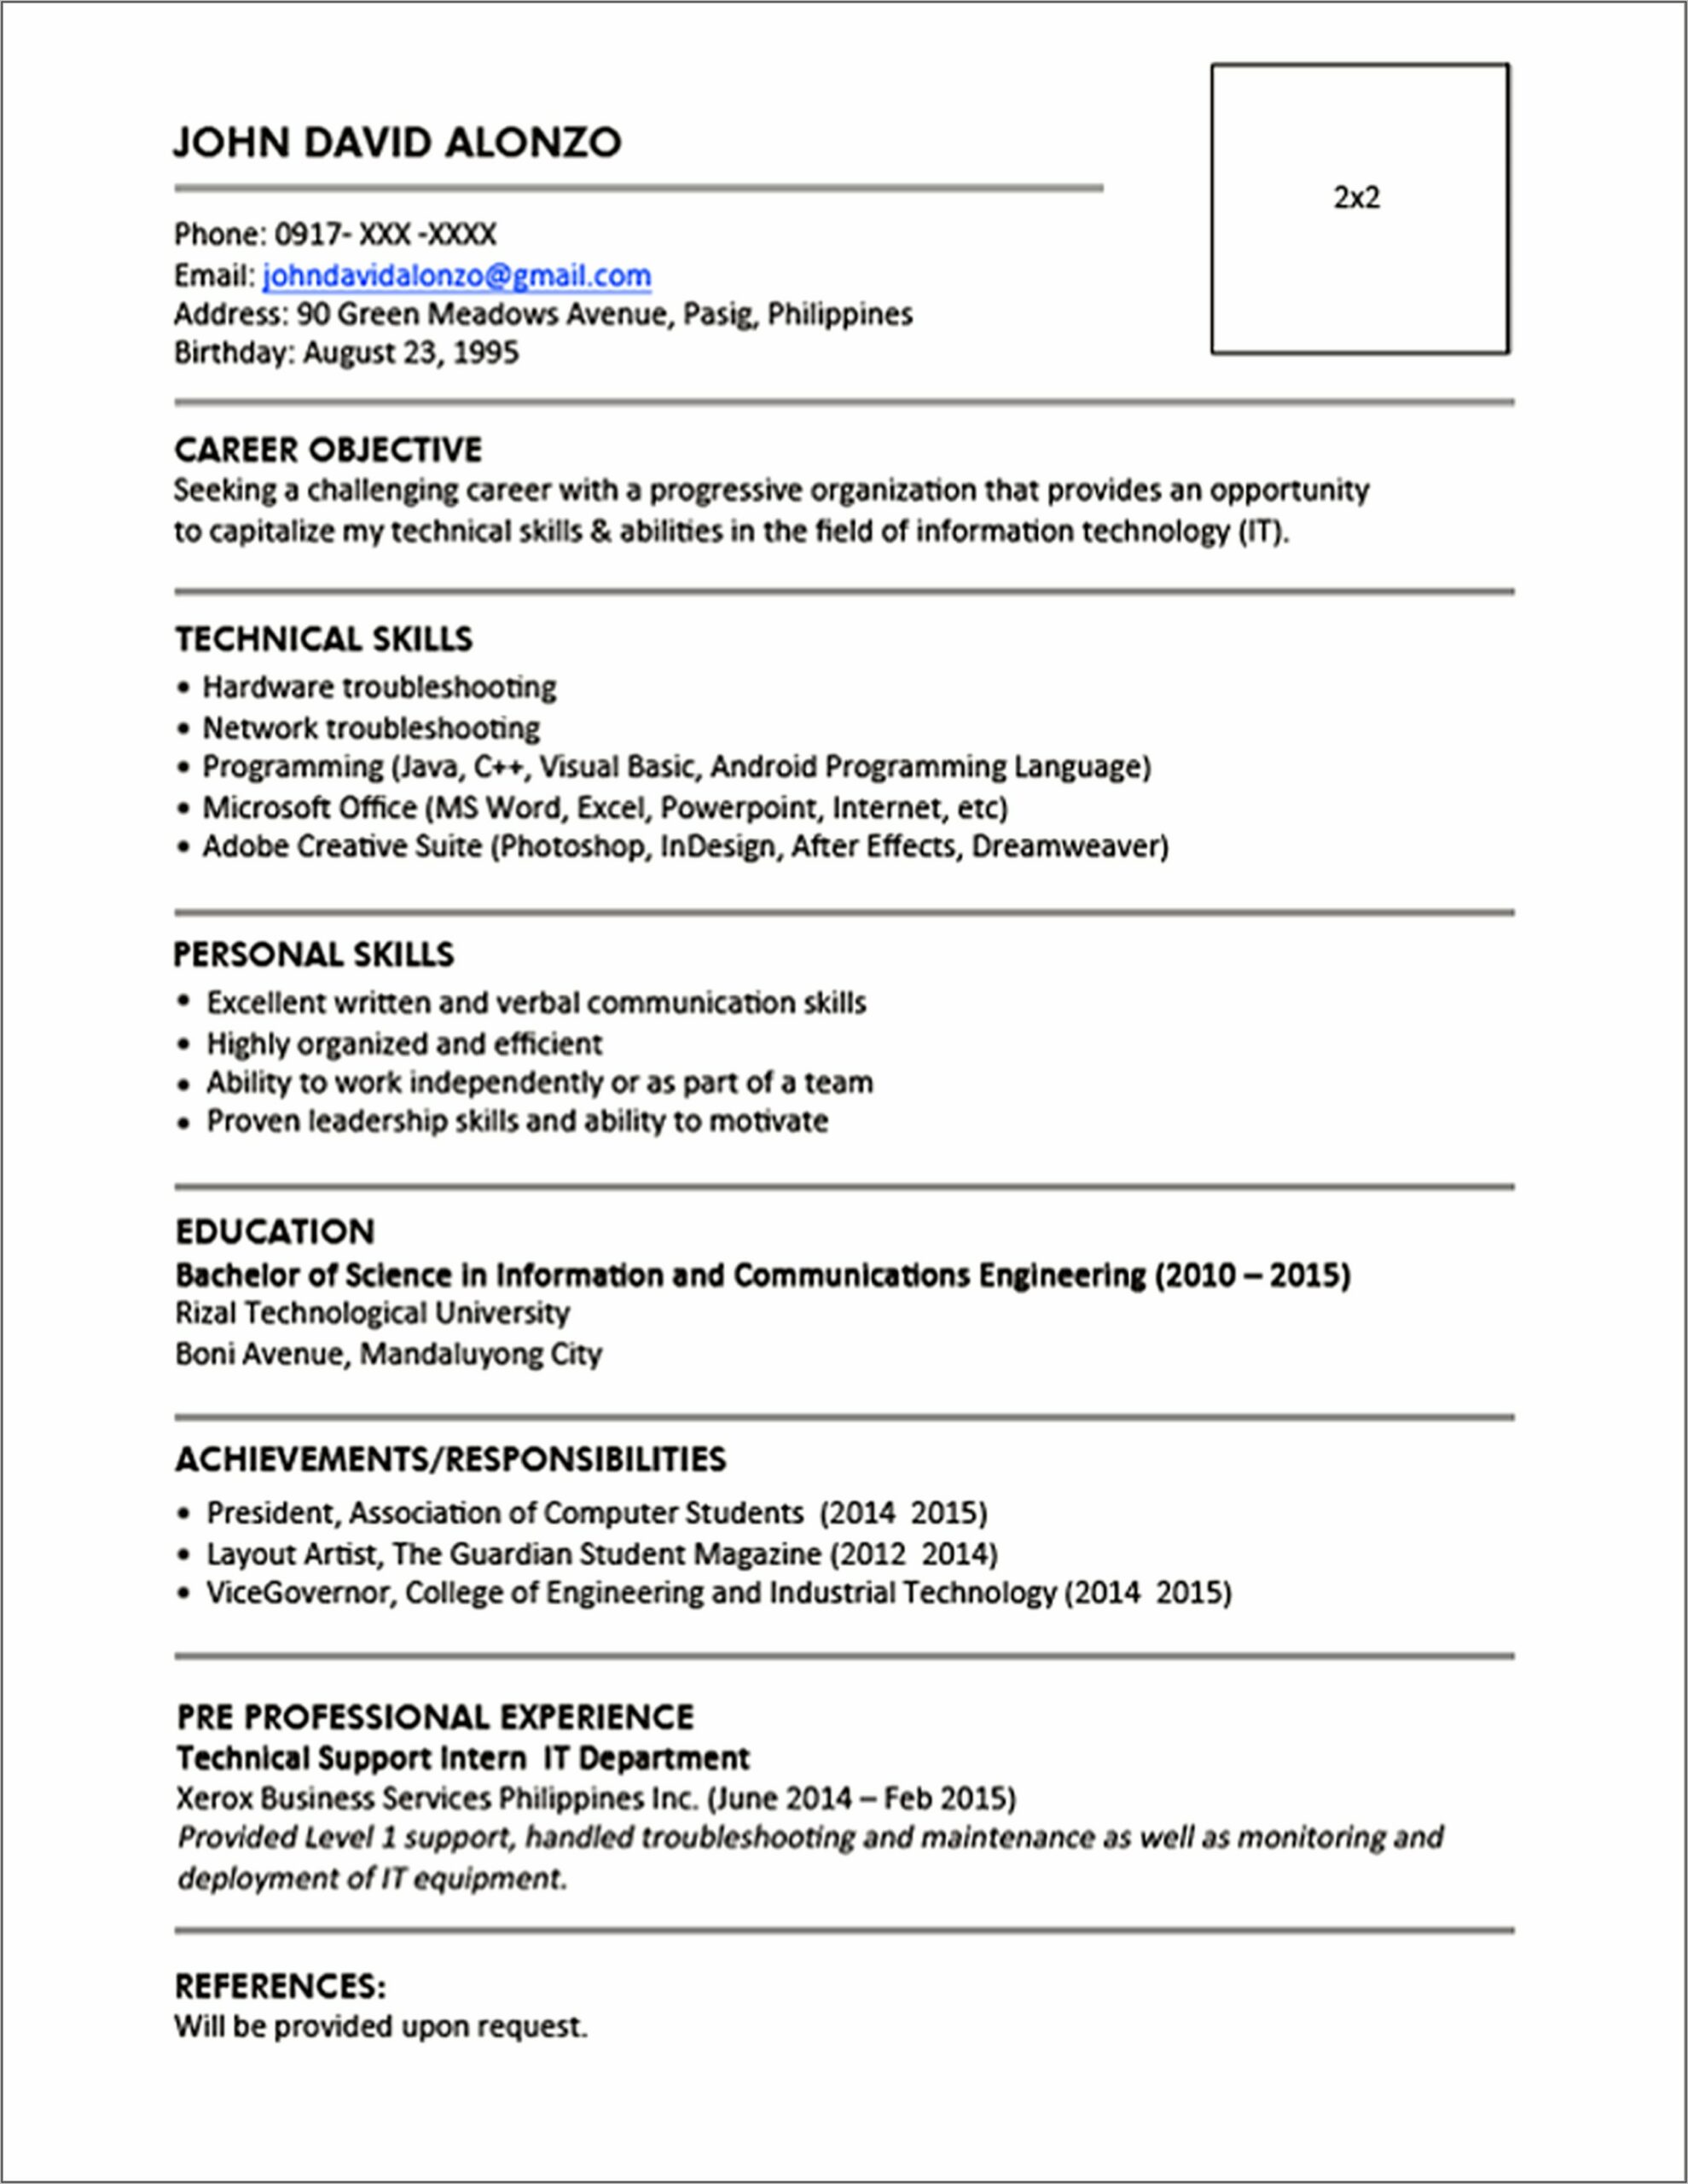 Sample Resume Format Download For Freshers